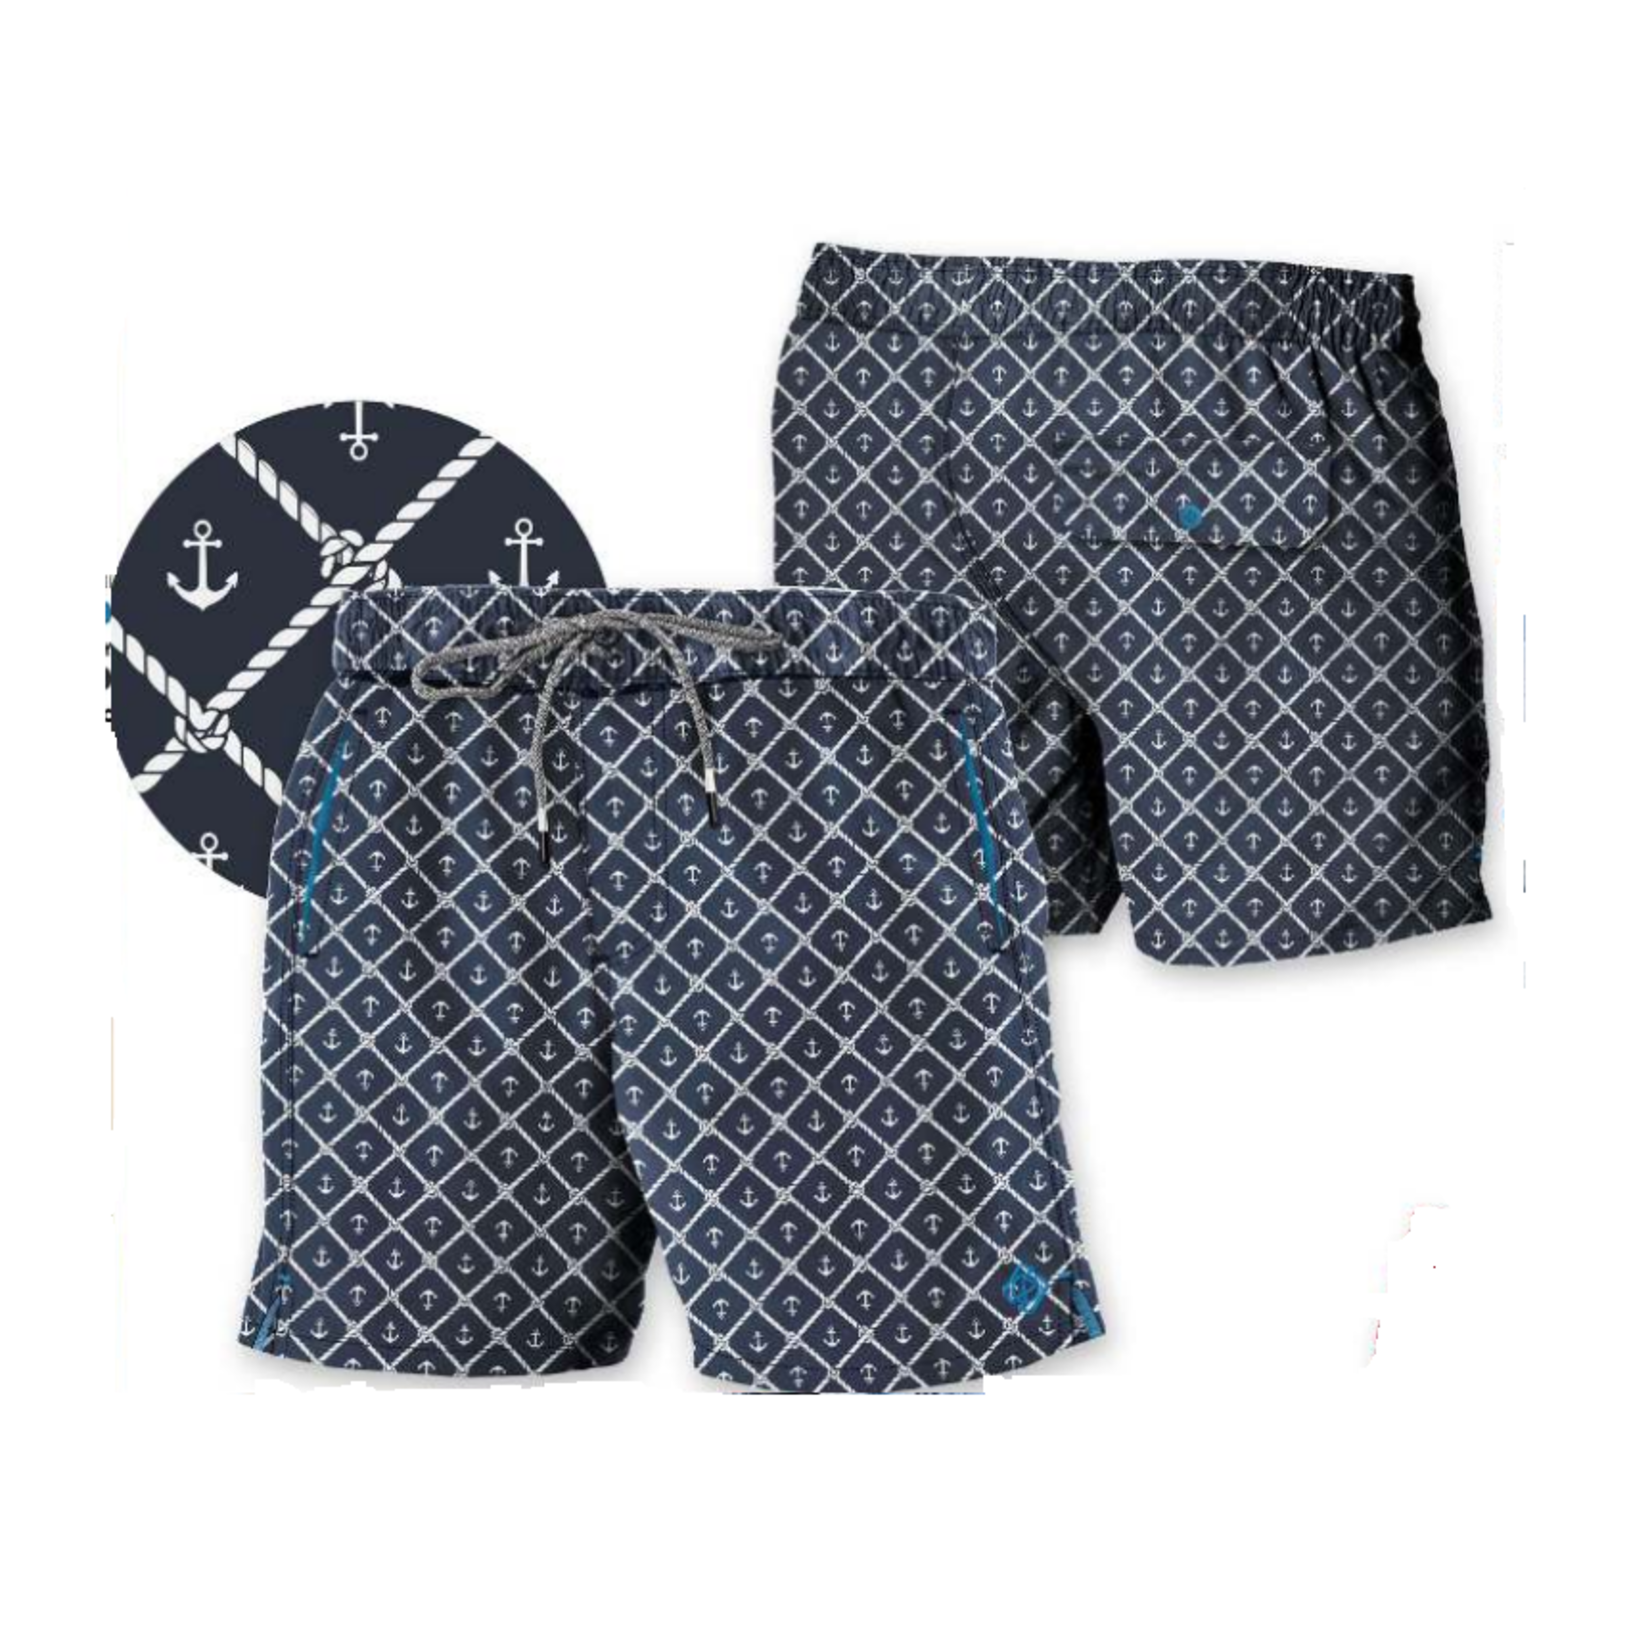 Point Zero Point Zero recycled anchor print swimshorts 6.5 inseam, short, trunks